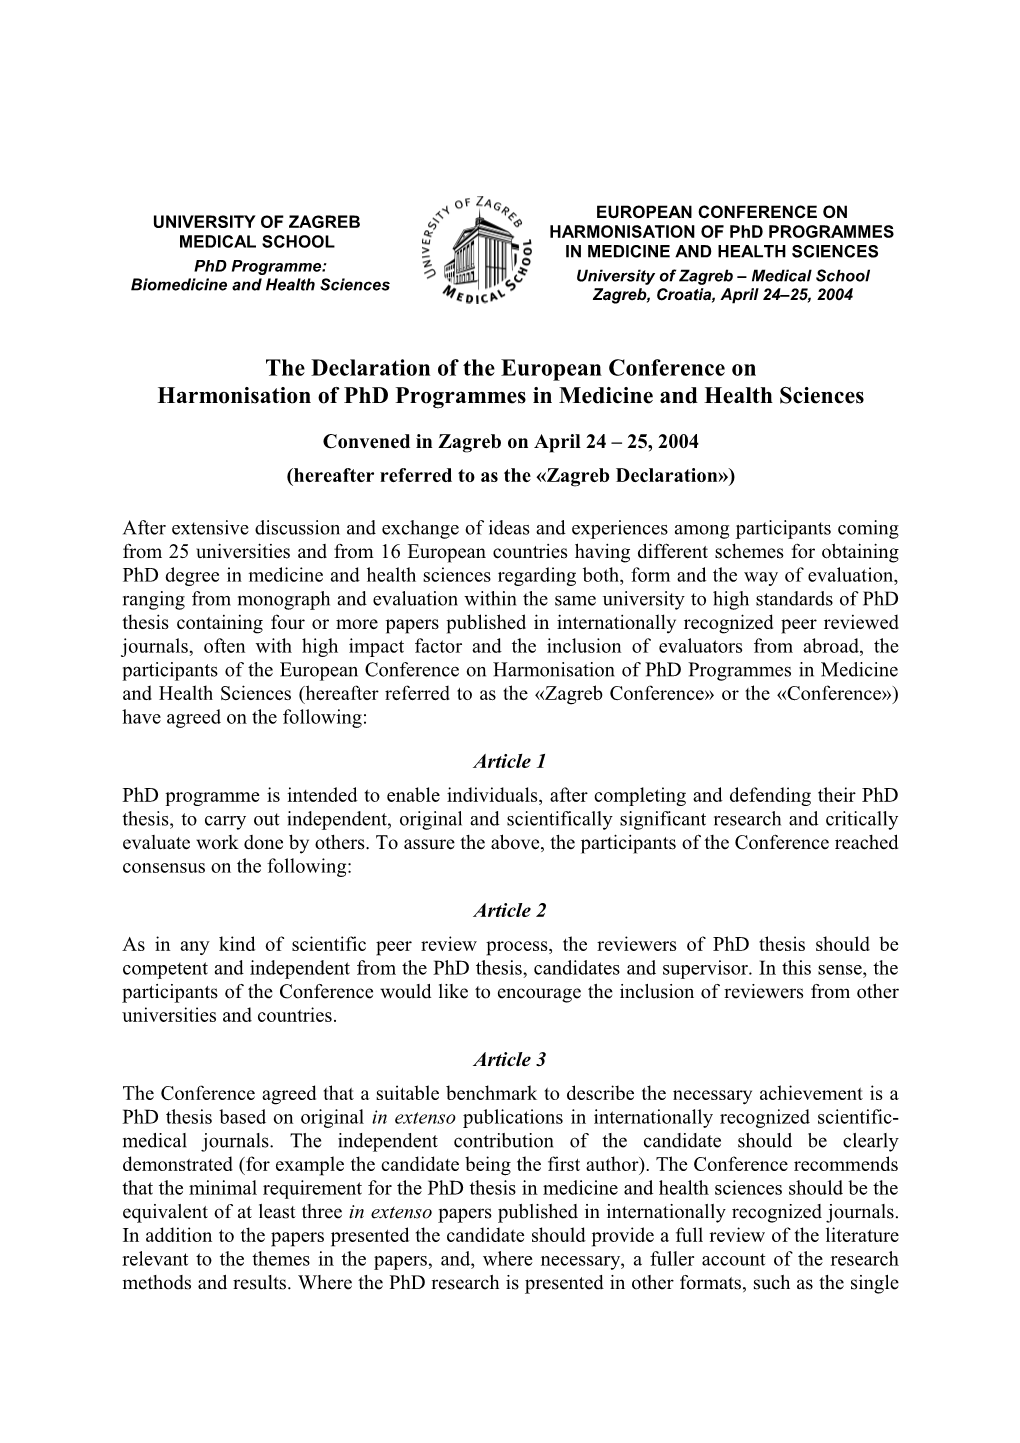 Phd Programme:Biomedicine and Health Sciences